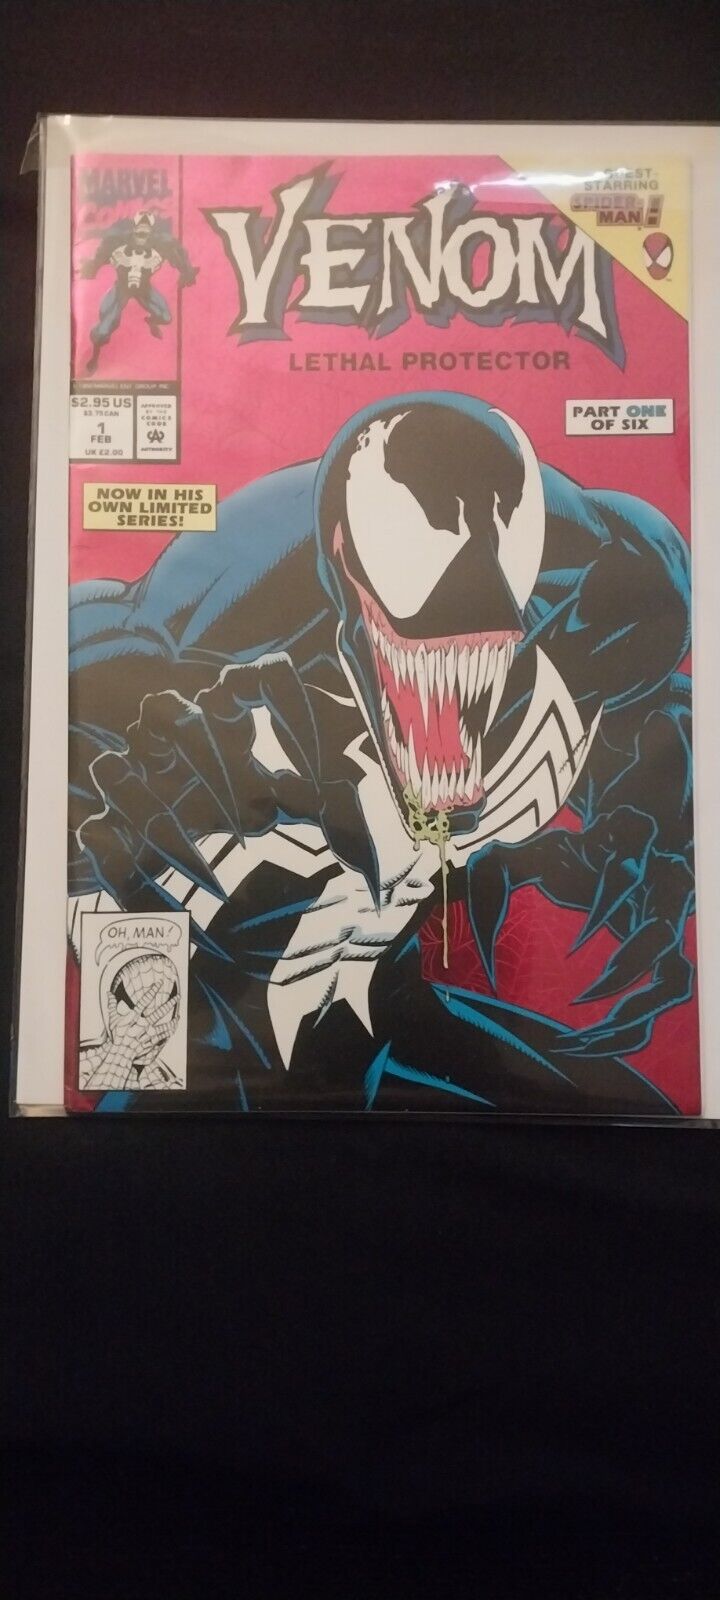 Venom: Lethal Protector #1 (Marvel Comics May 1993) RED FOIL VARIANT